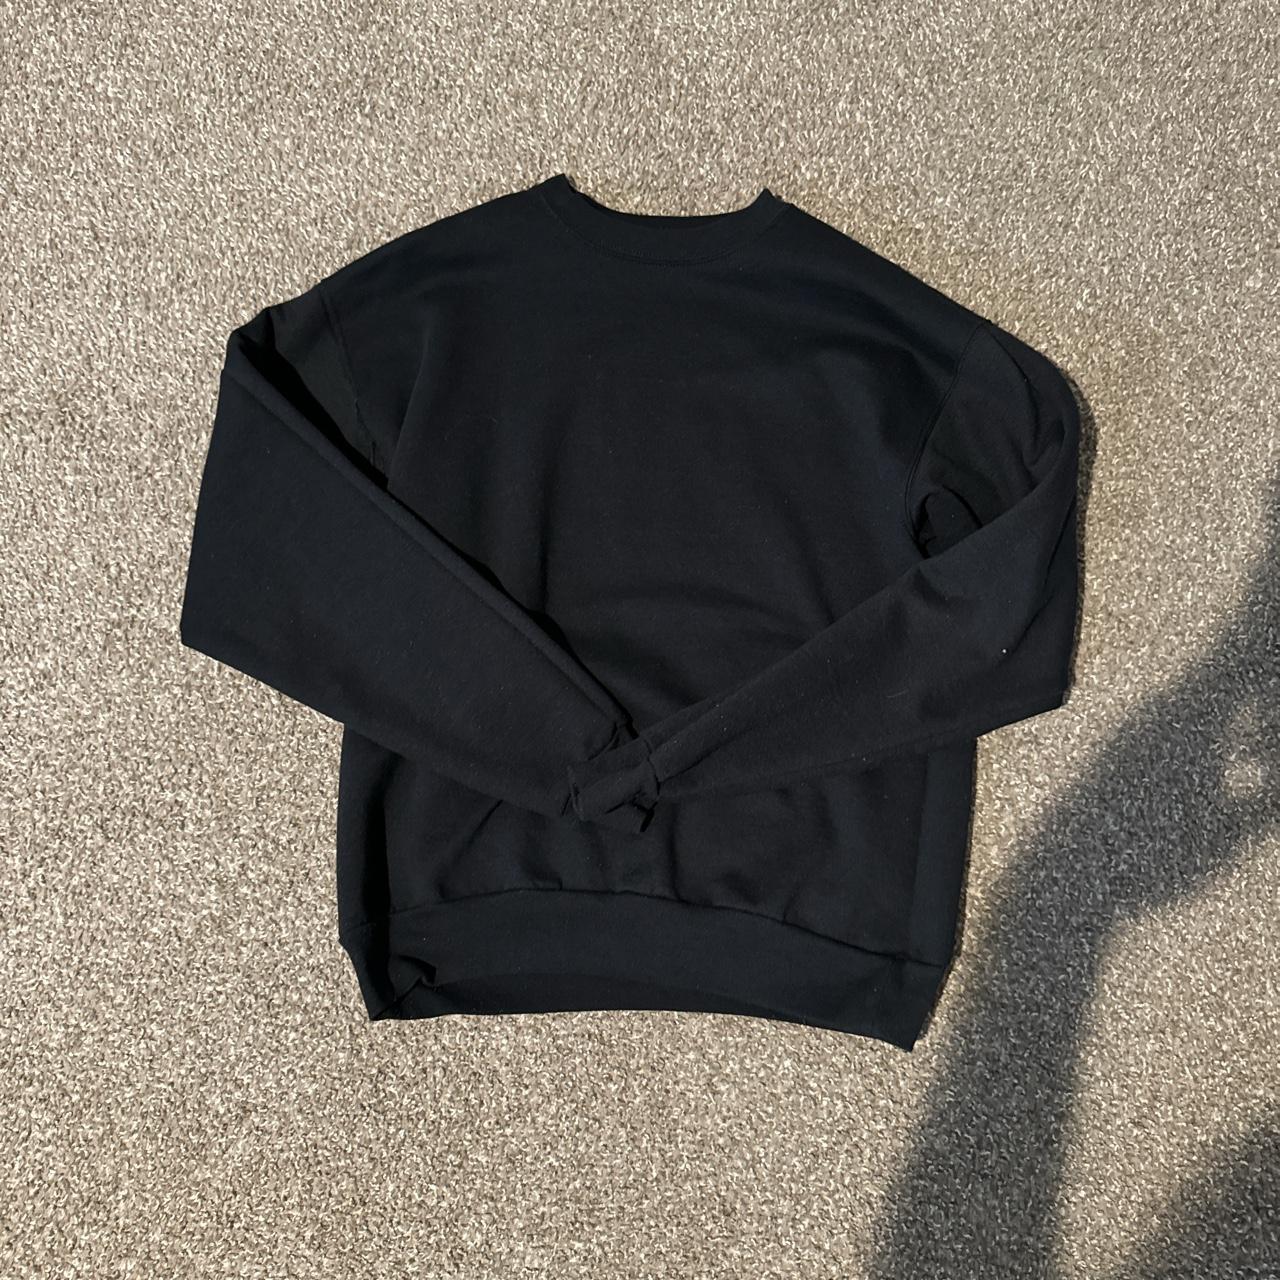 Vintage Black sweater - Depop